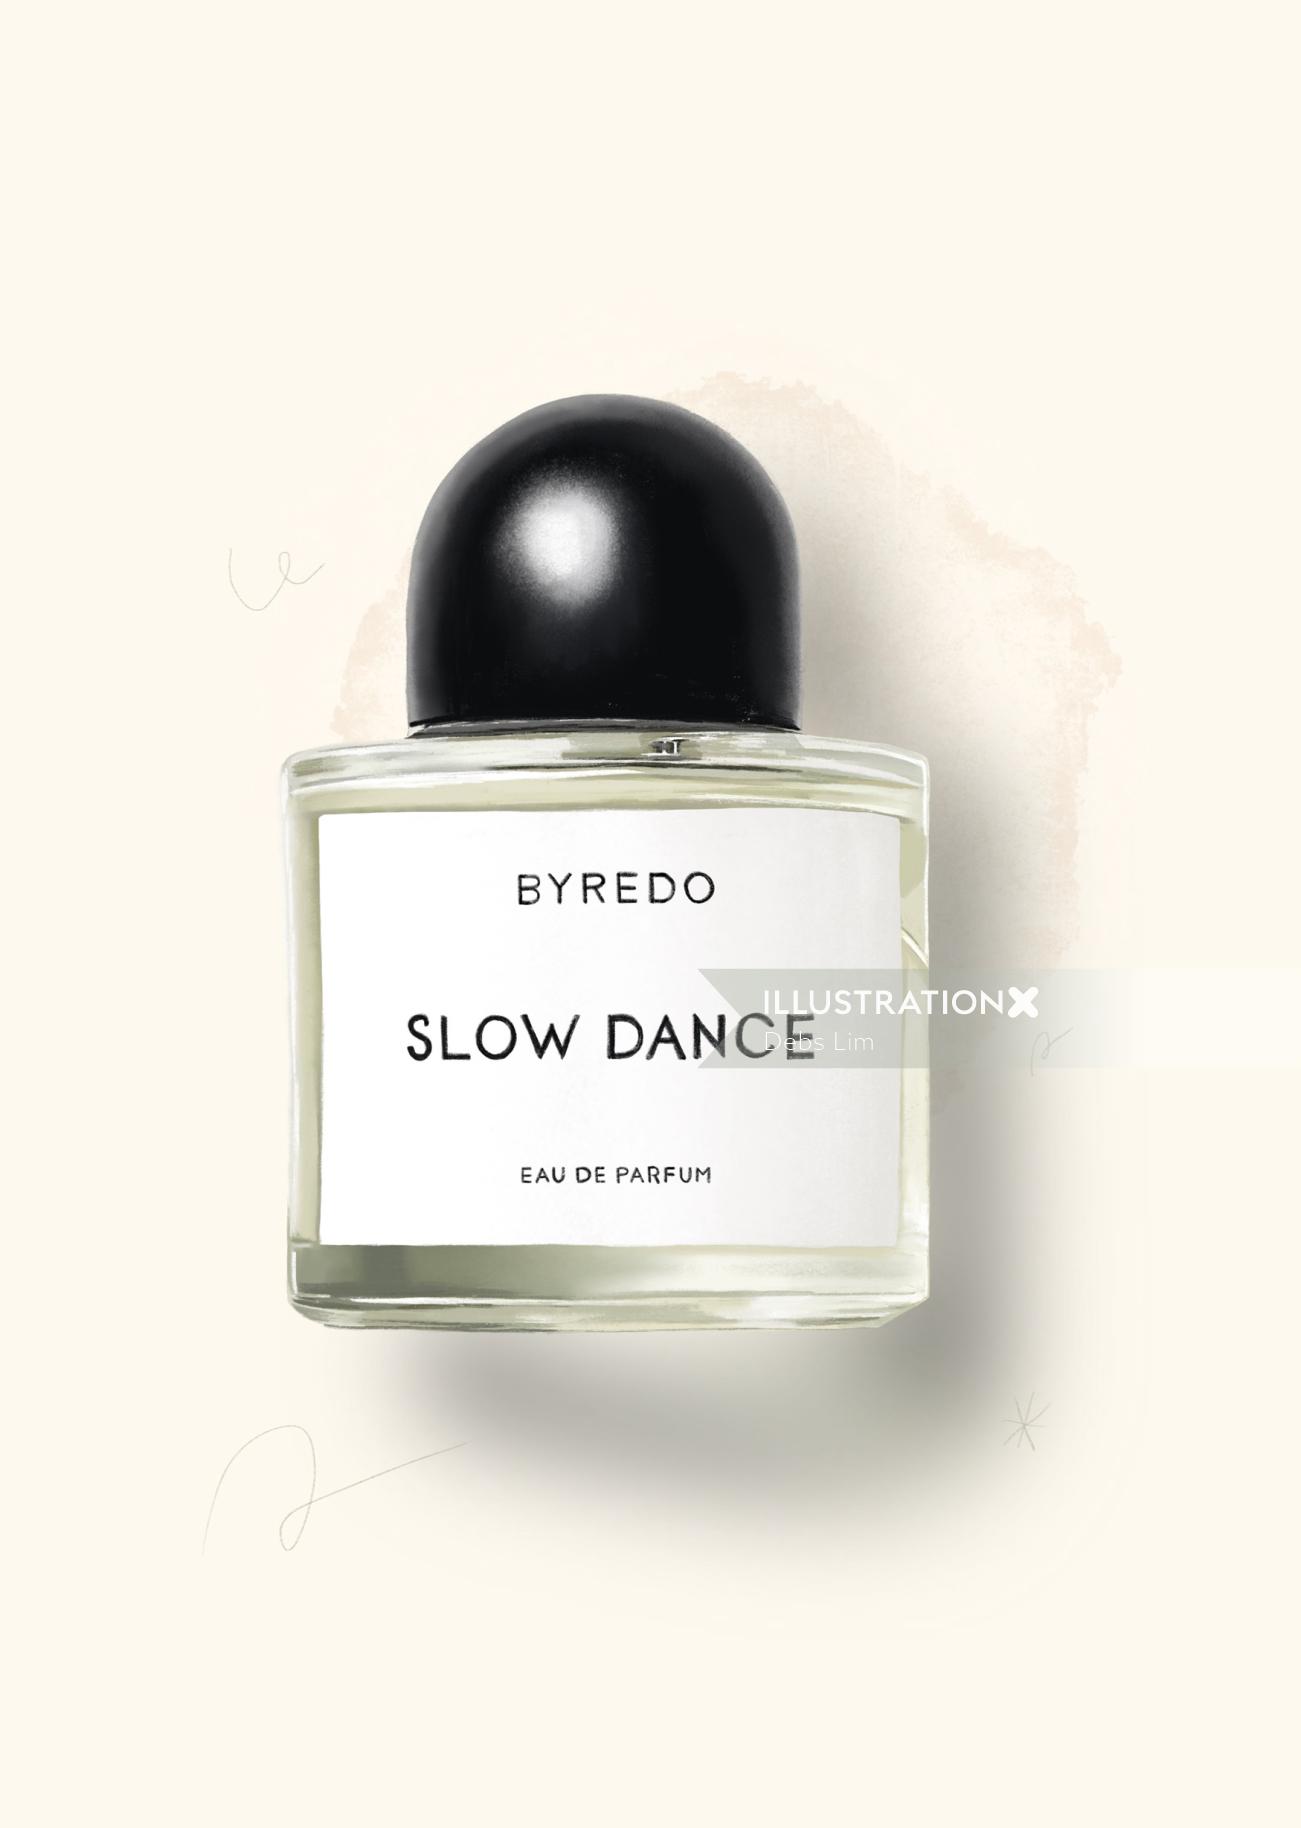 Byredo Slow Dance
